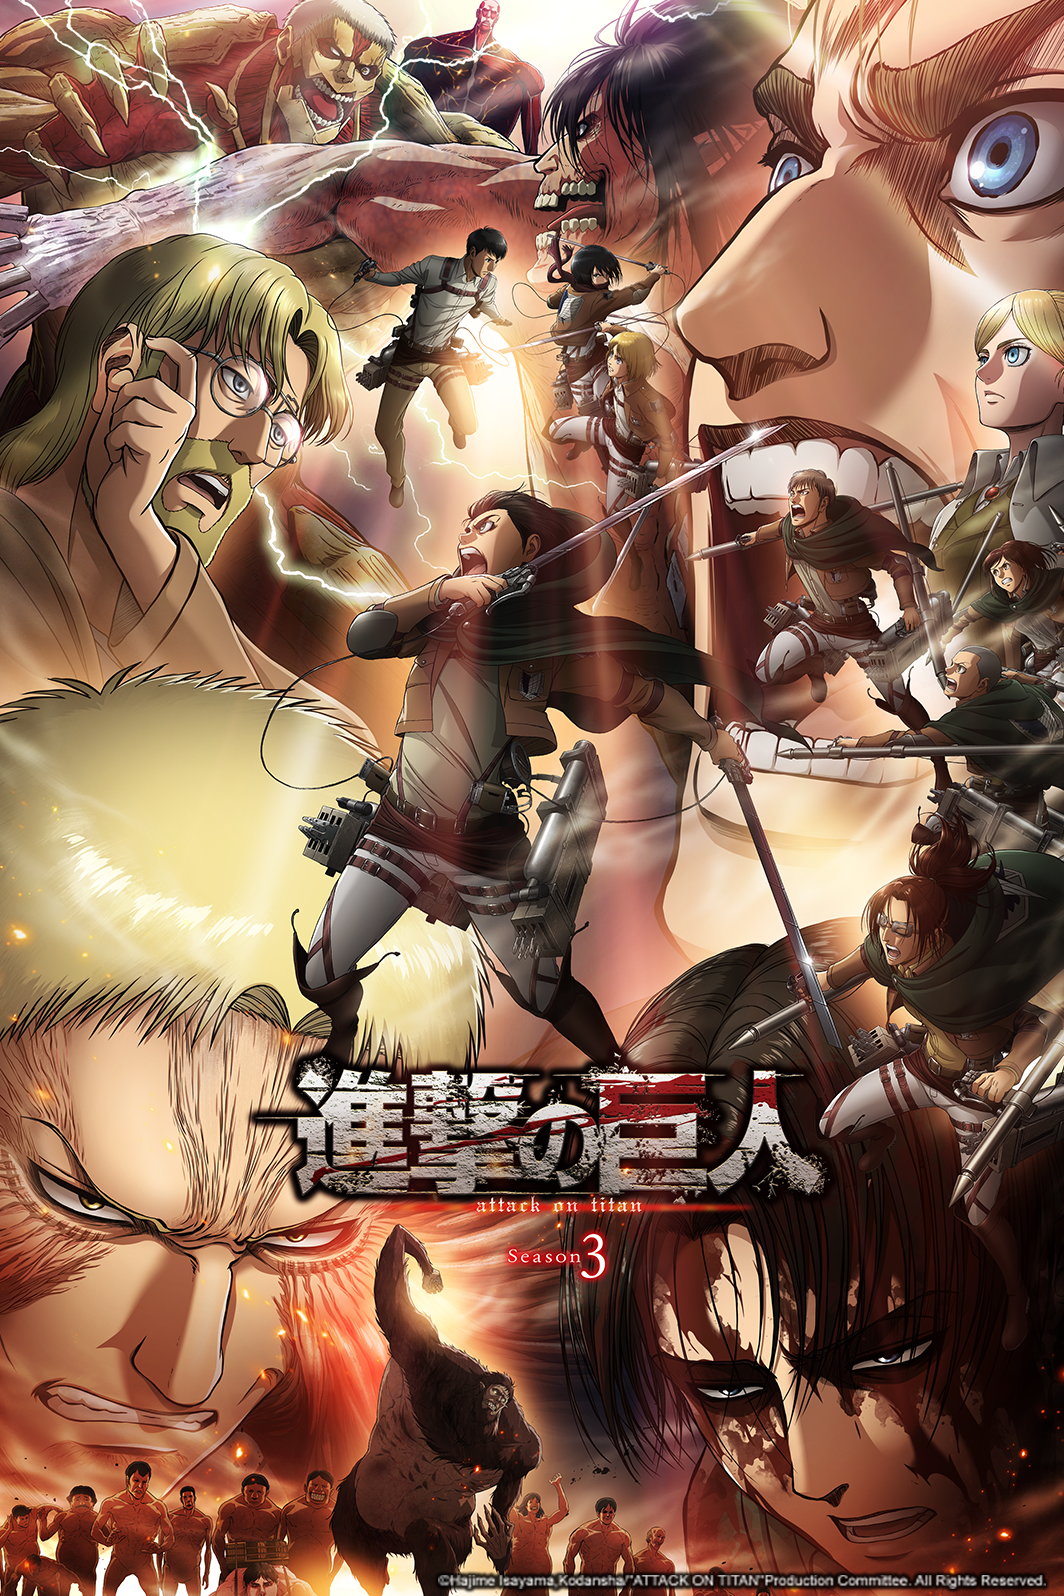 Aesthetic Anime Wallpaper Attack On Titan